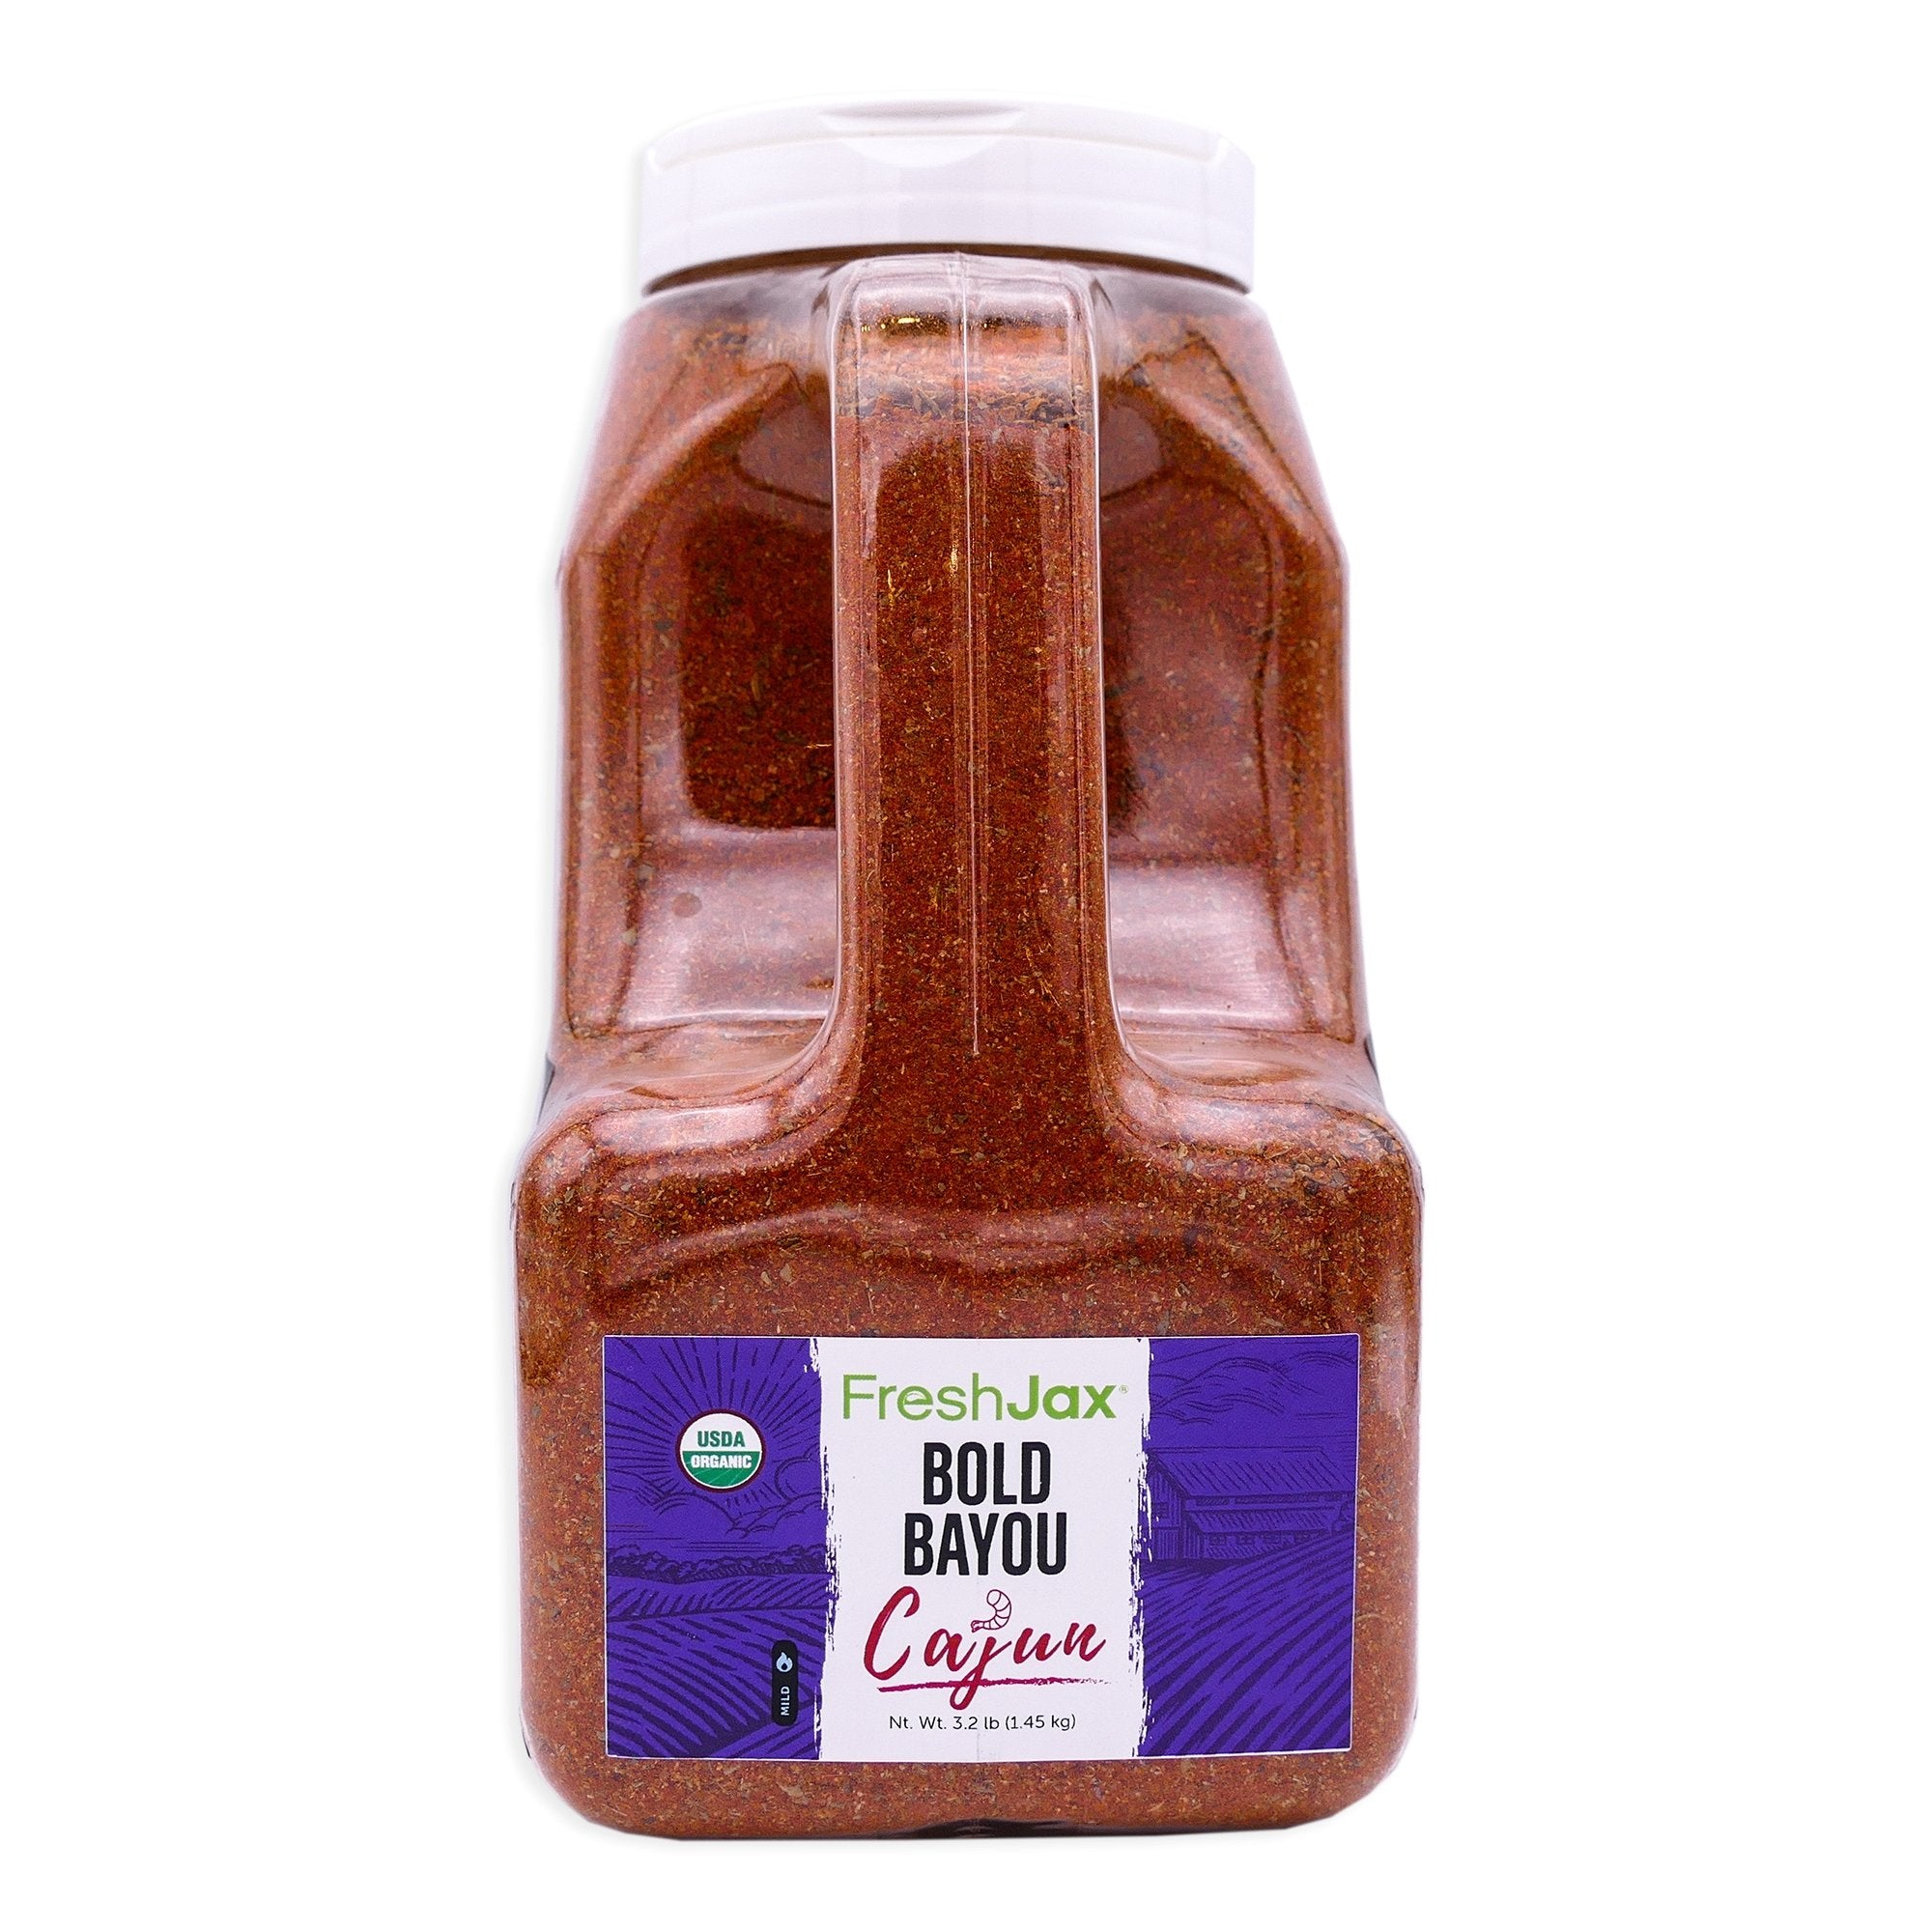 Freshjax Bold Bayou Organic Cajun Seasoning - 4.3oz, Size: Large